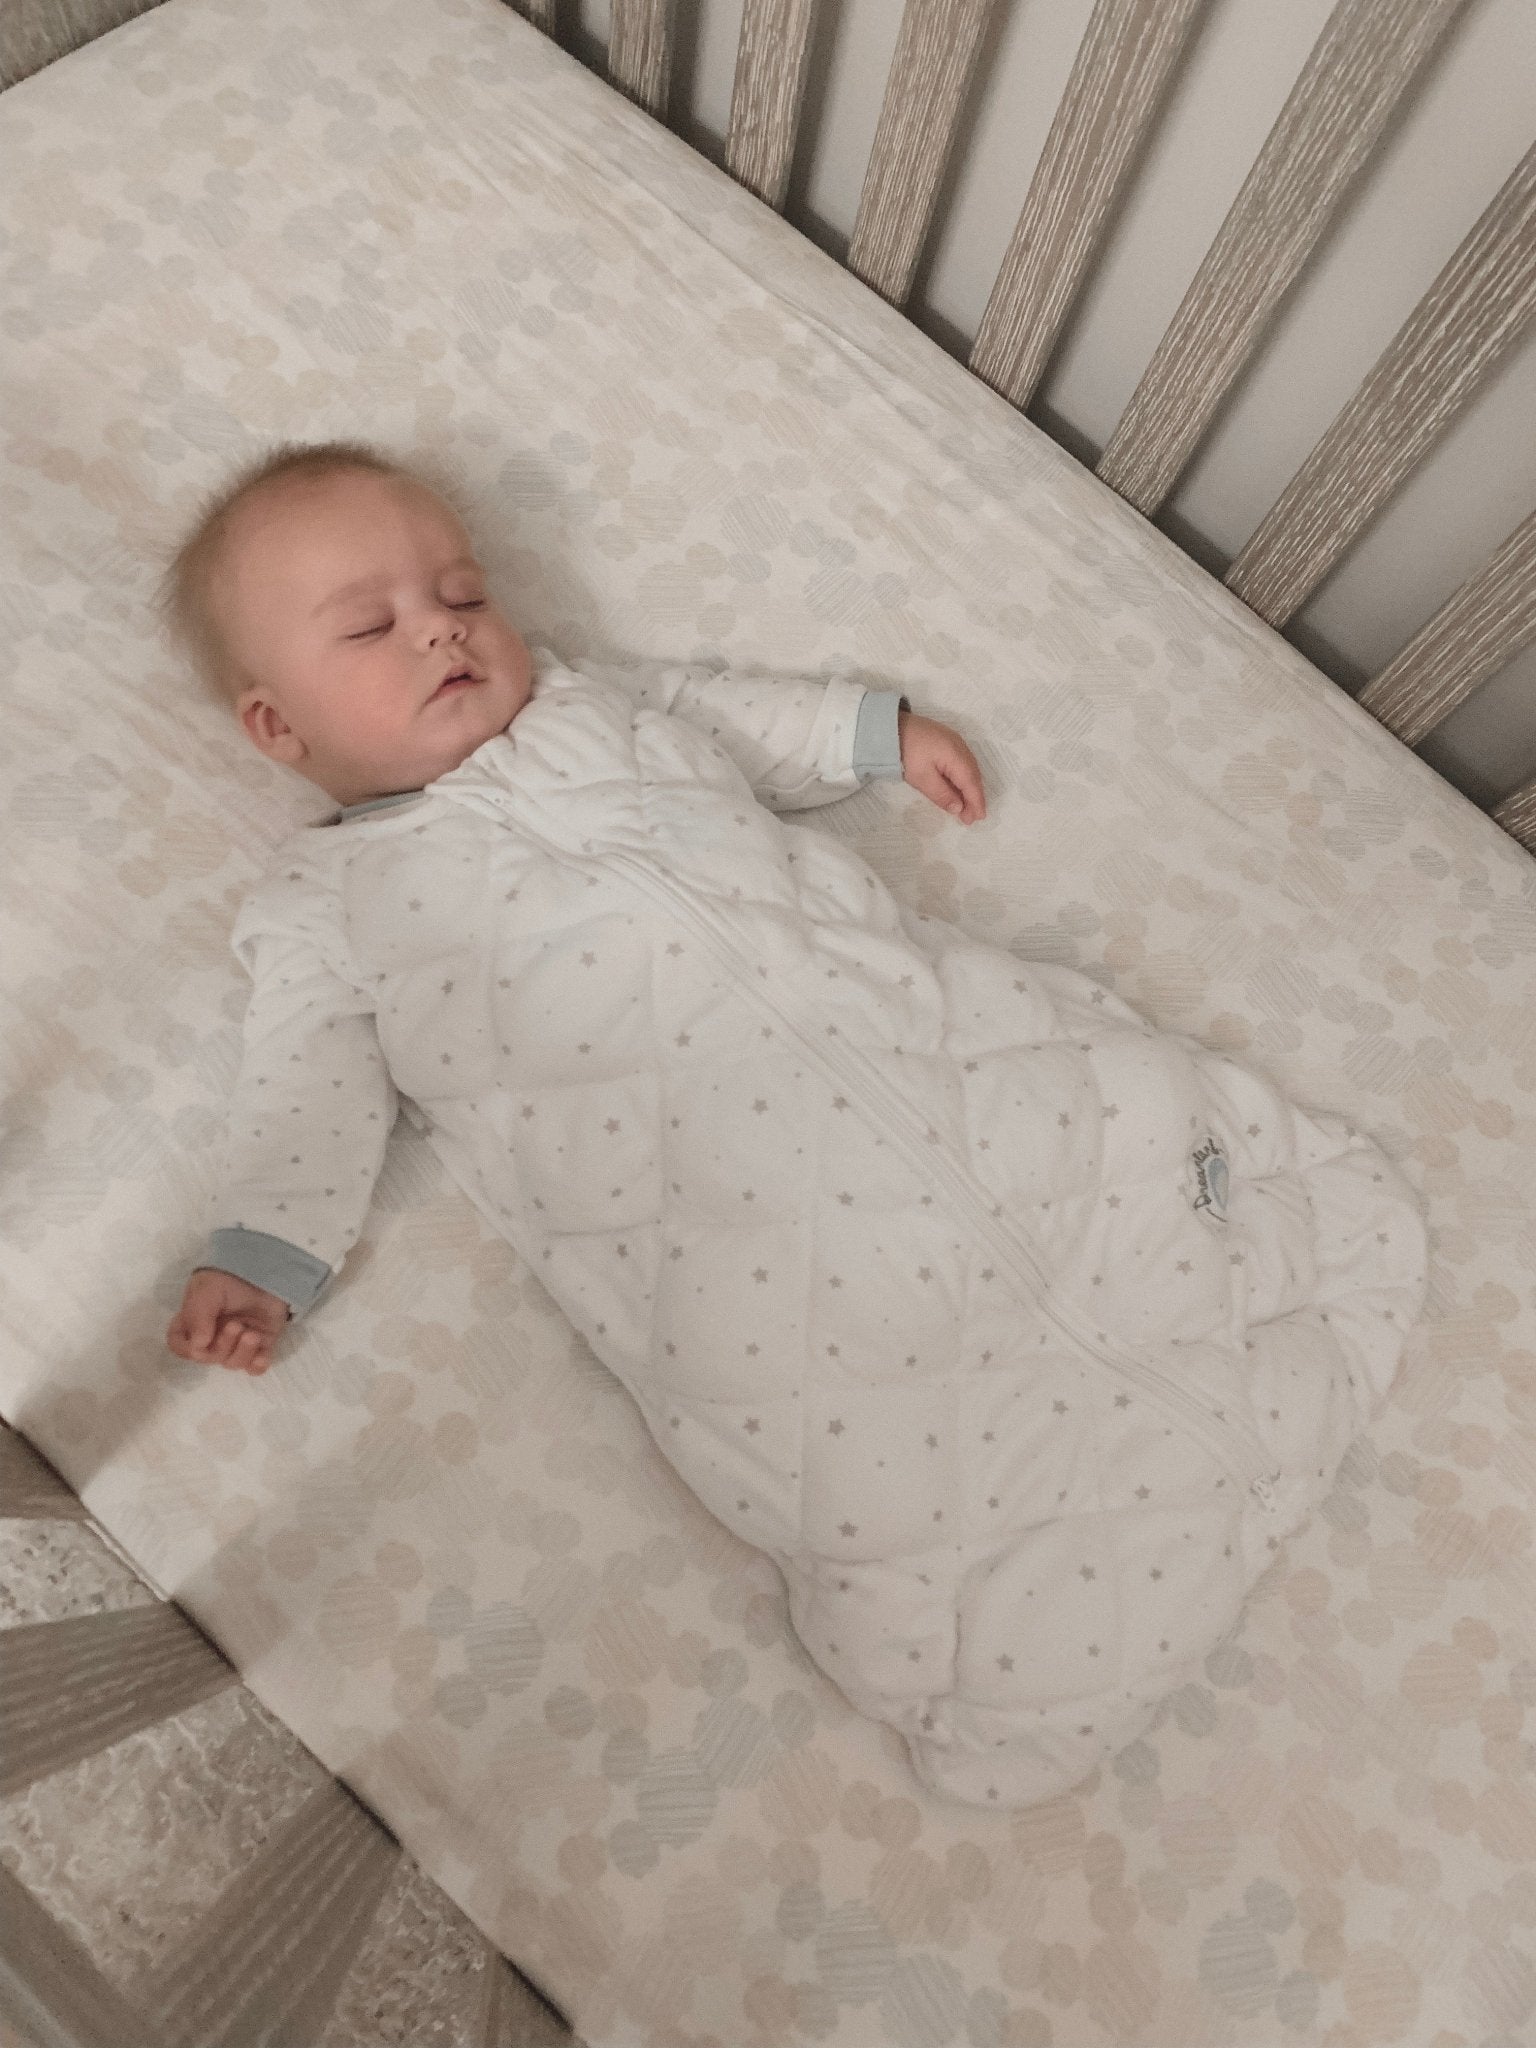 A New Mom's Sleep Deprivation Story | Dreamland Baby